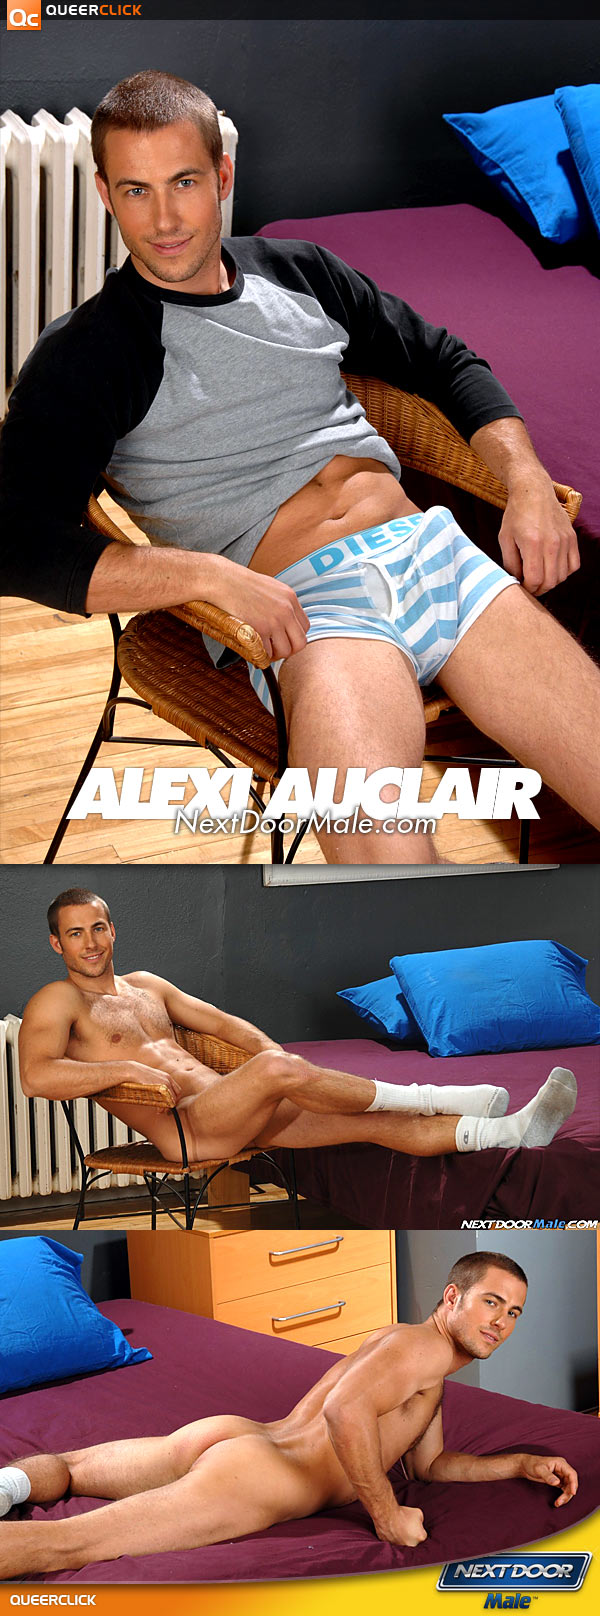 Next Door Male: Alexi Auclair